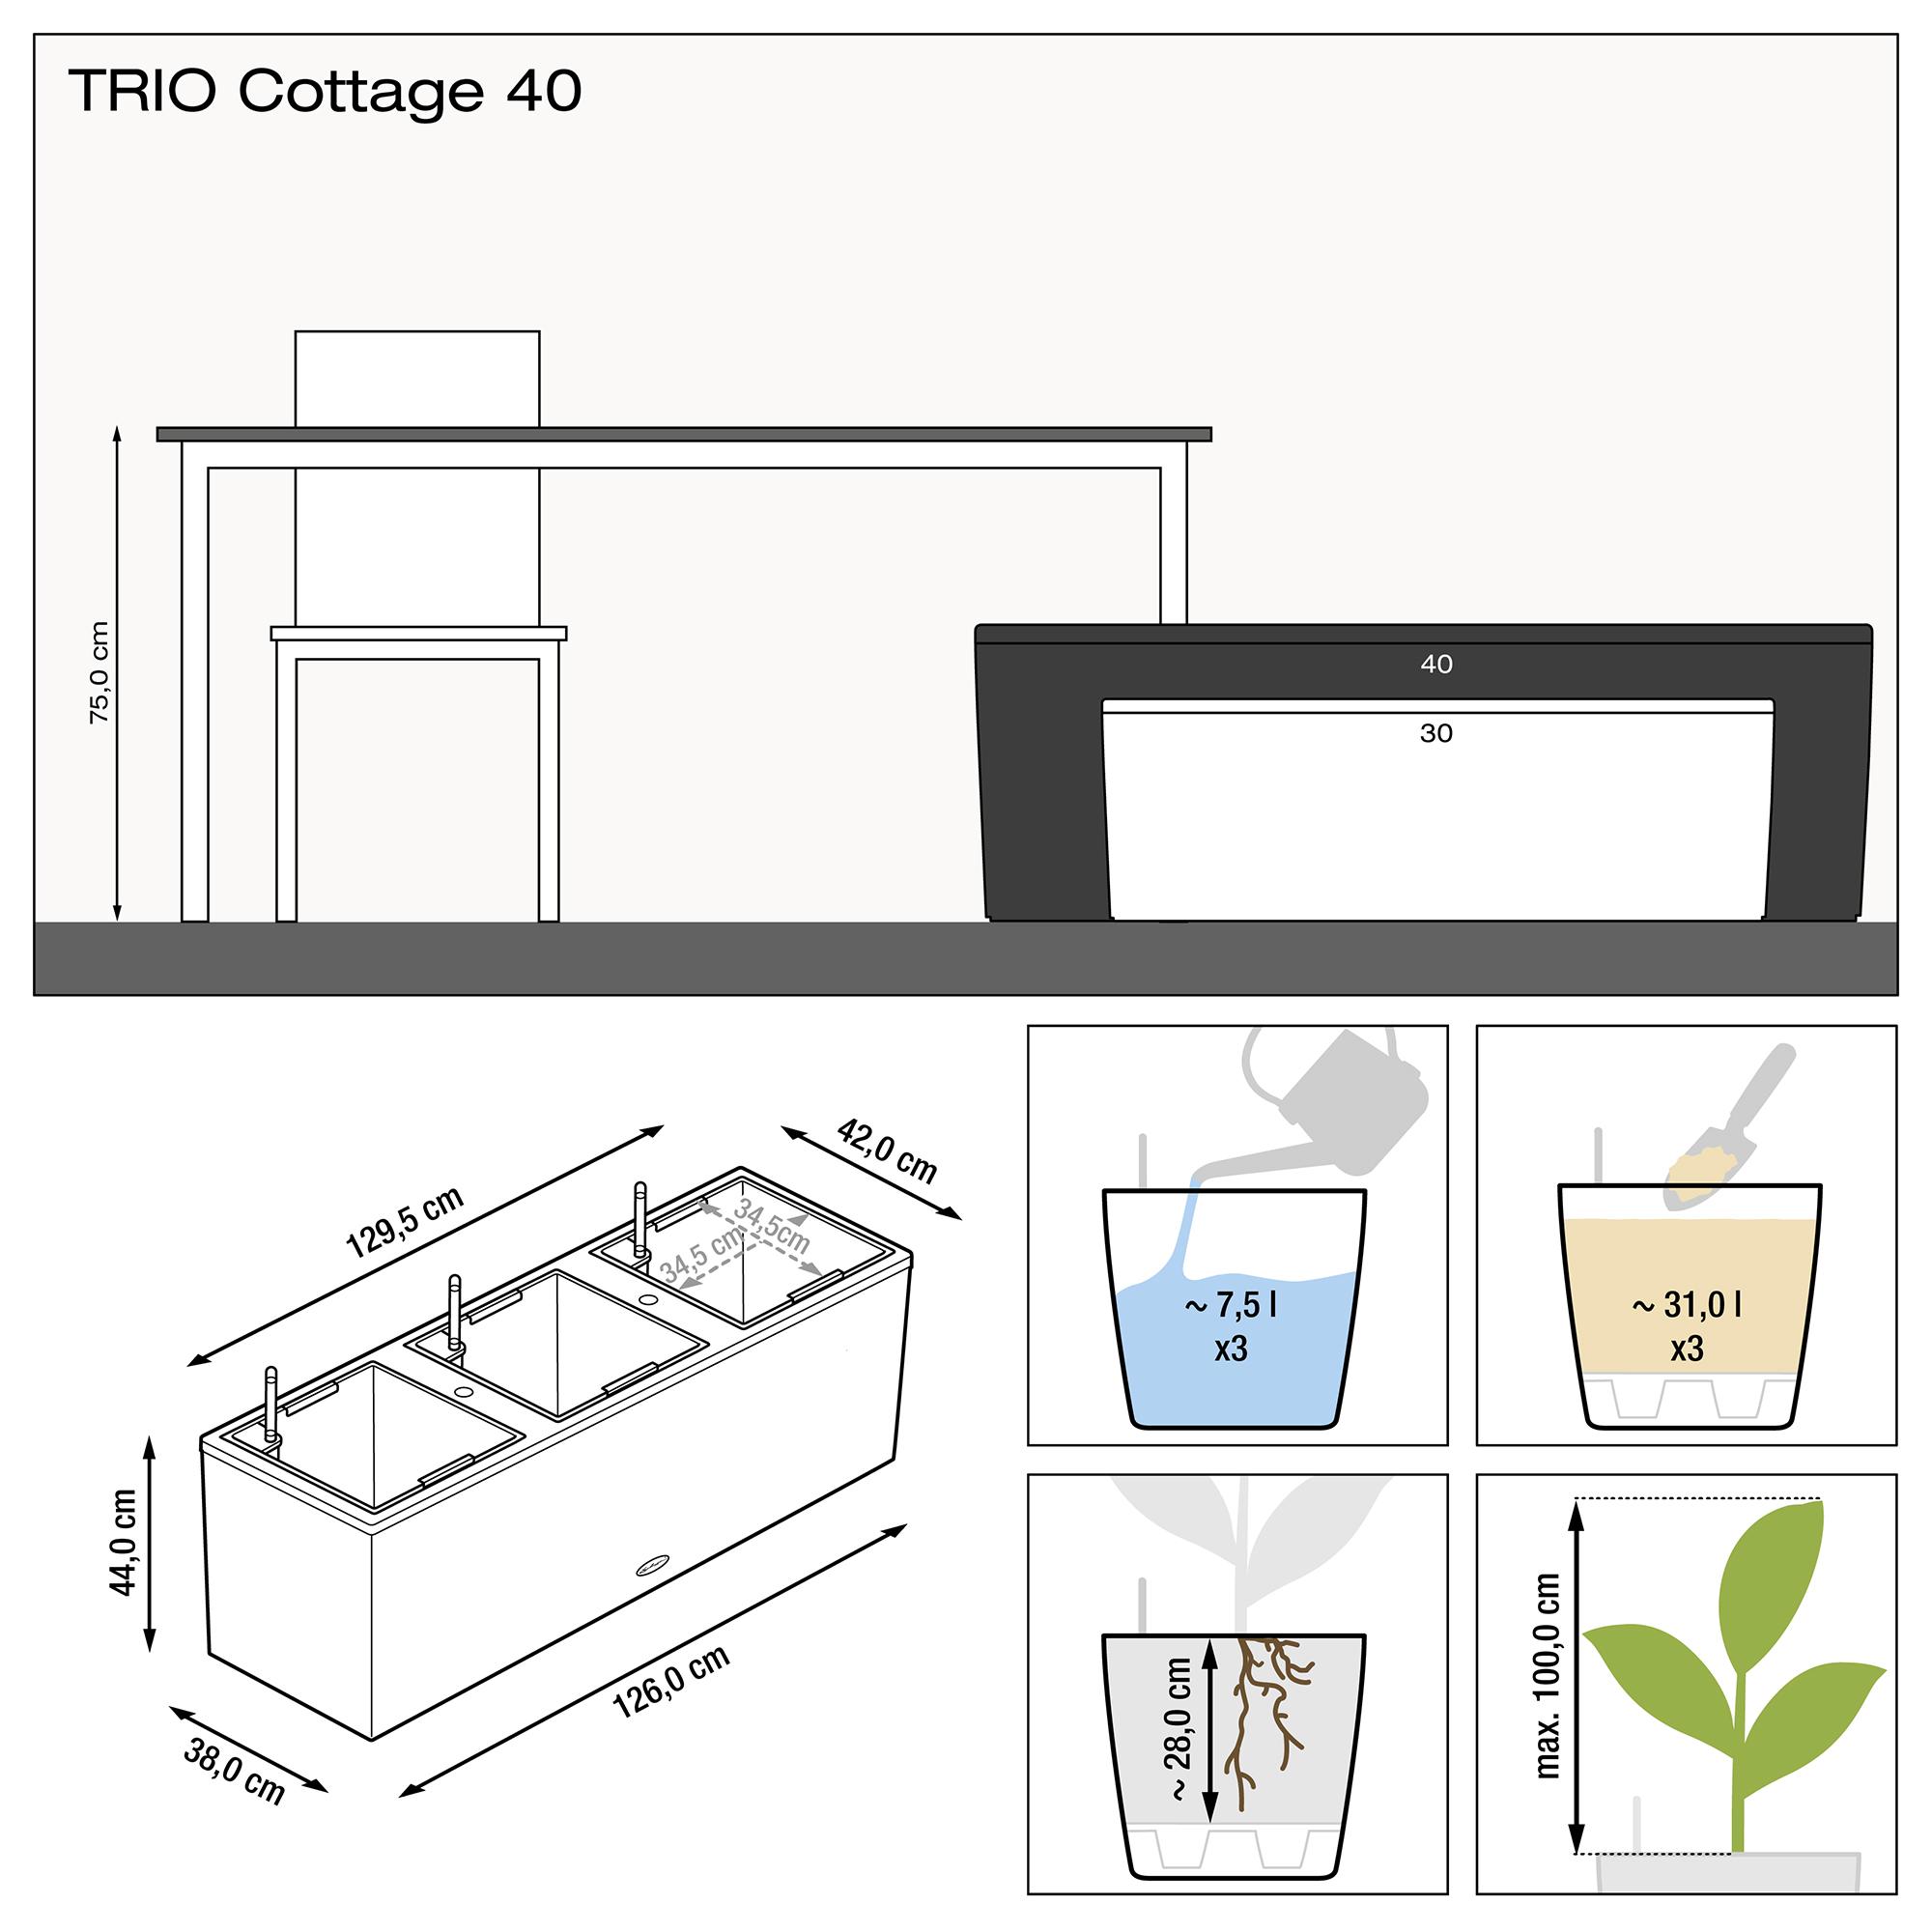 le_trio-cottage40_product_addi_nz